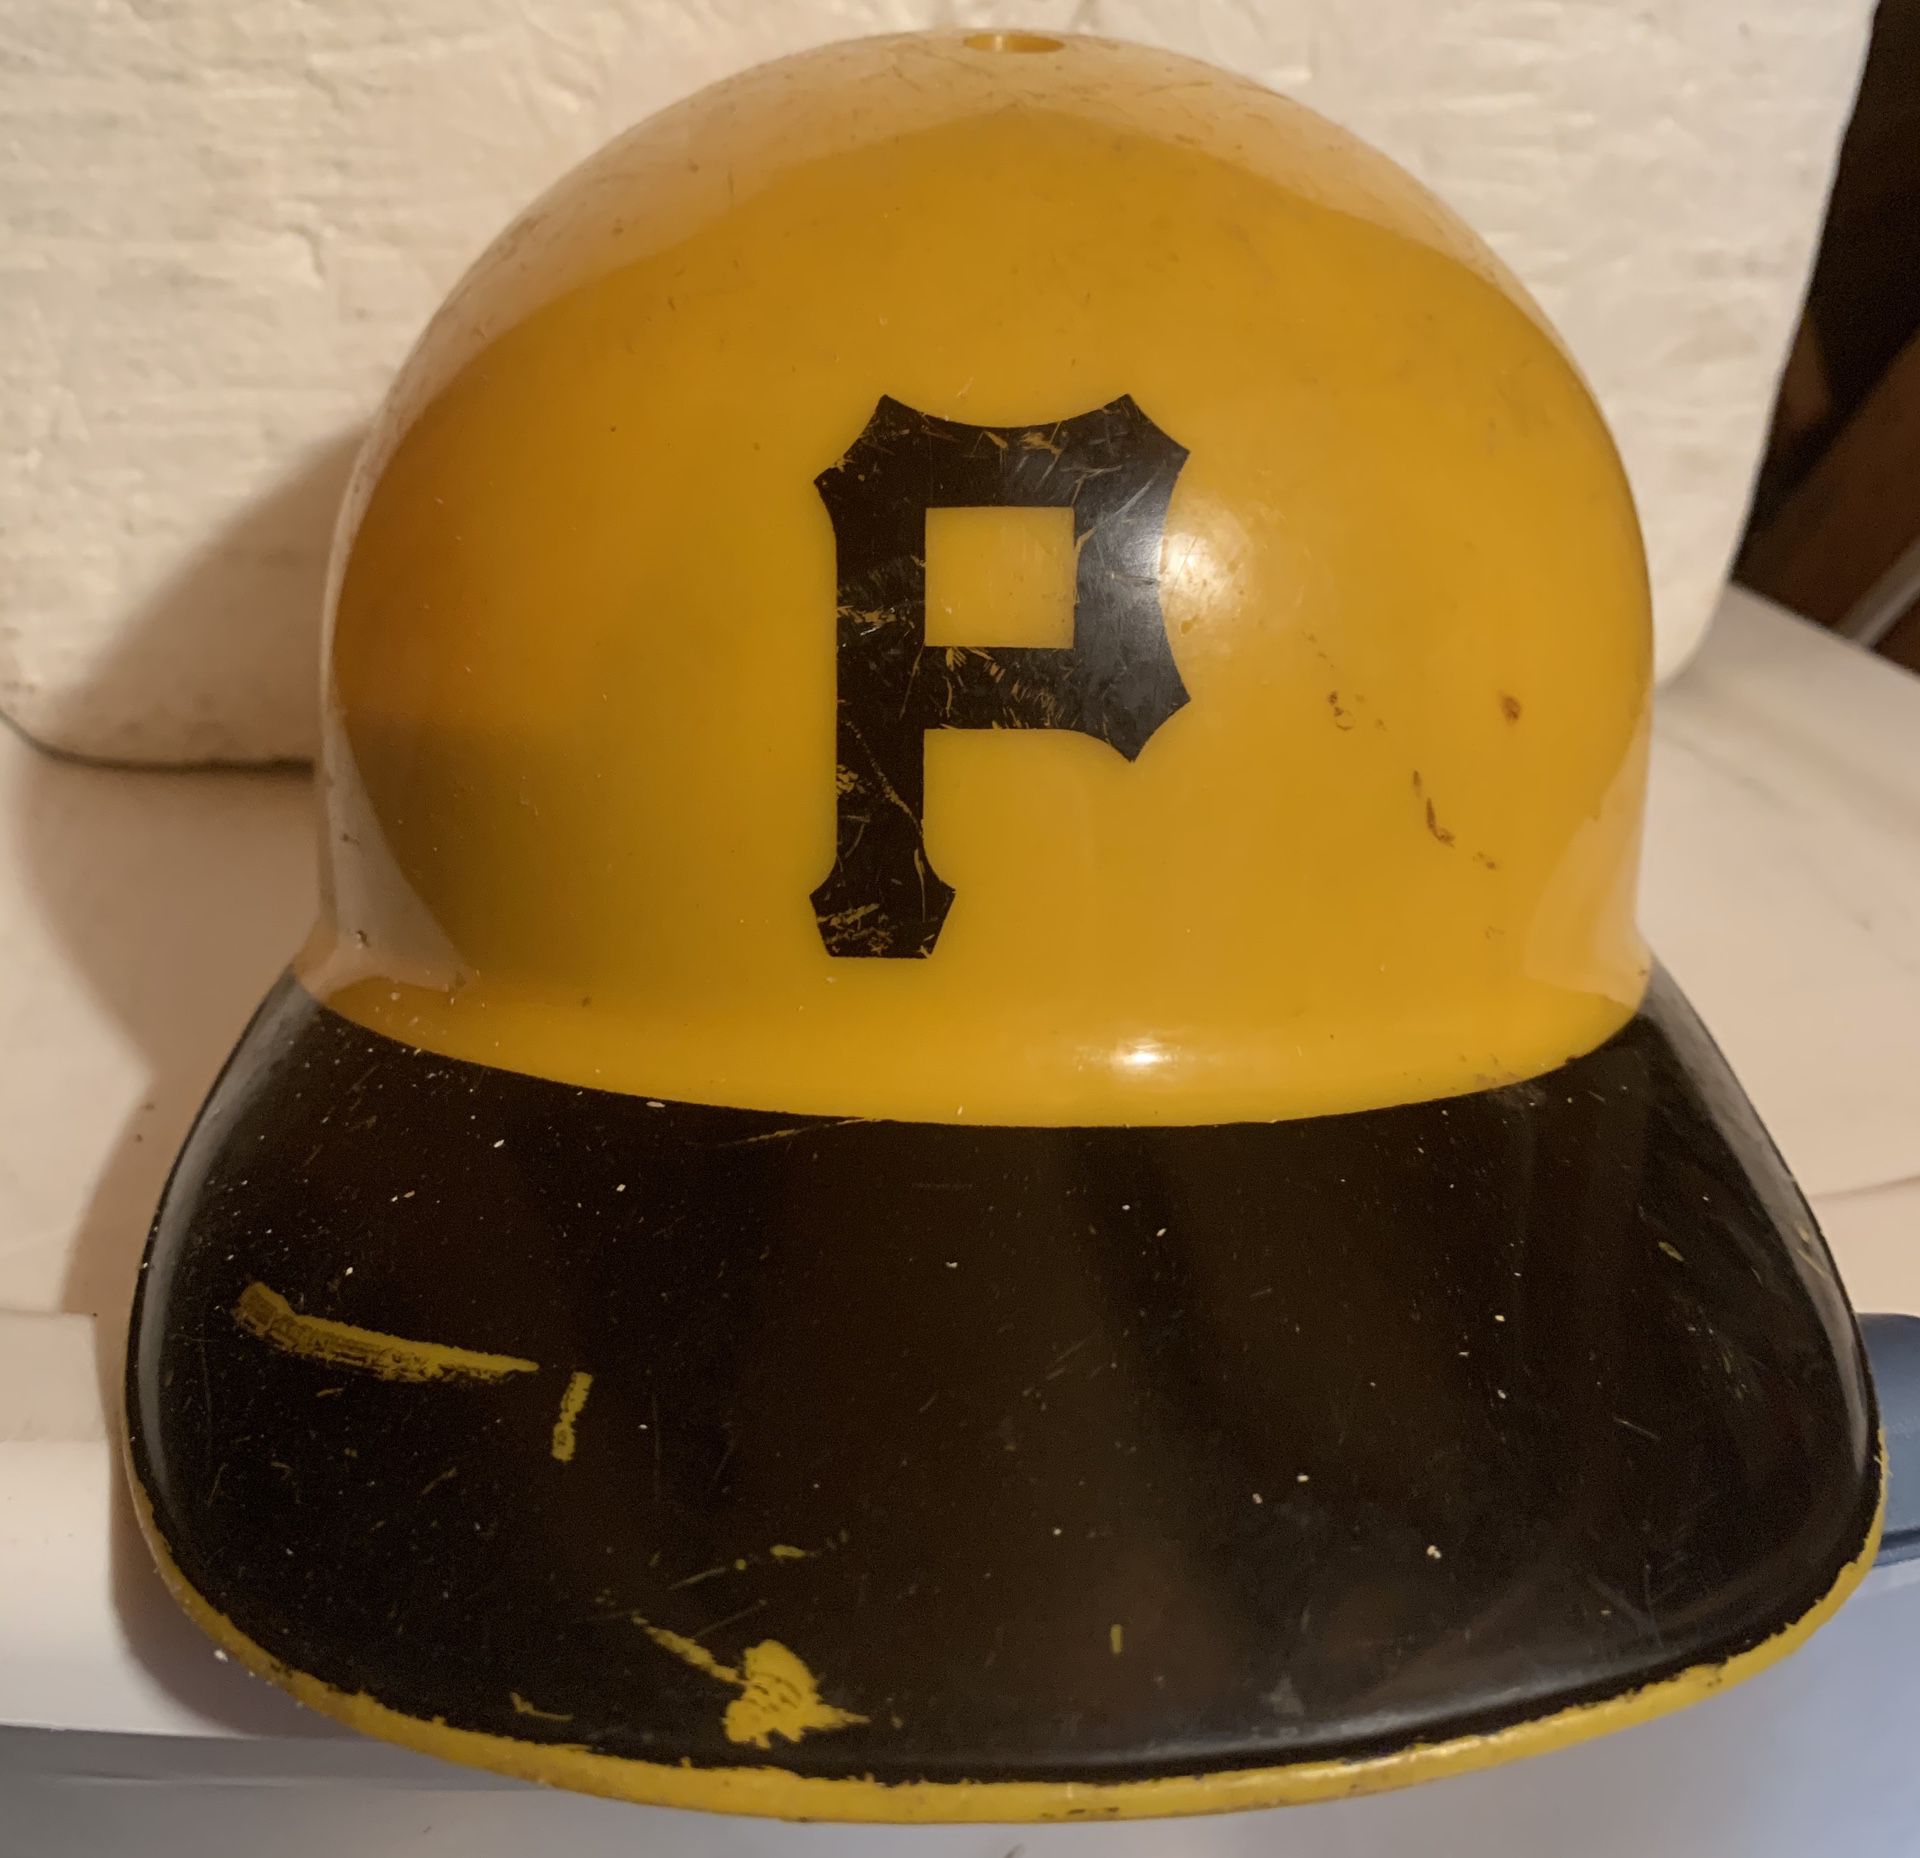 PITTSBURGH PIRATES - Plastic helmet